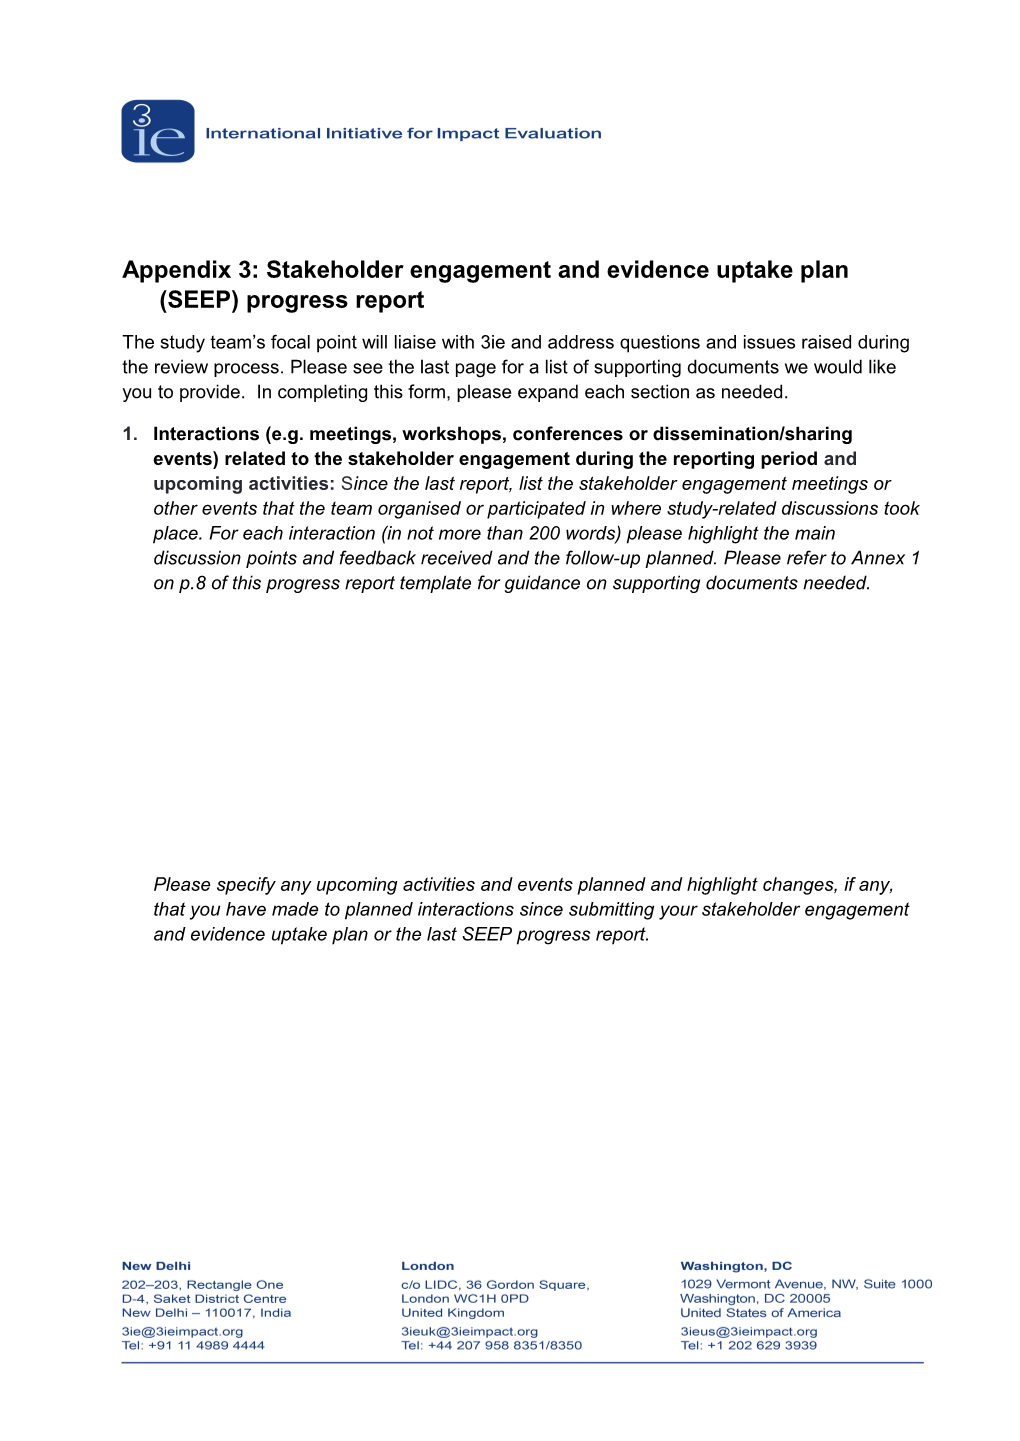 Appendix 3: Stakeholder Engagement and Evidence Uptake Plan (SEEP) Progress Report